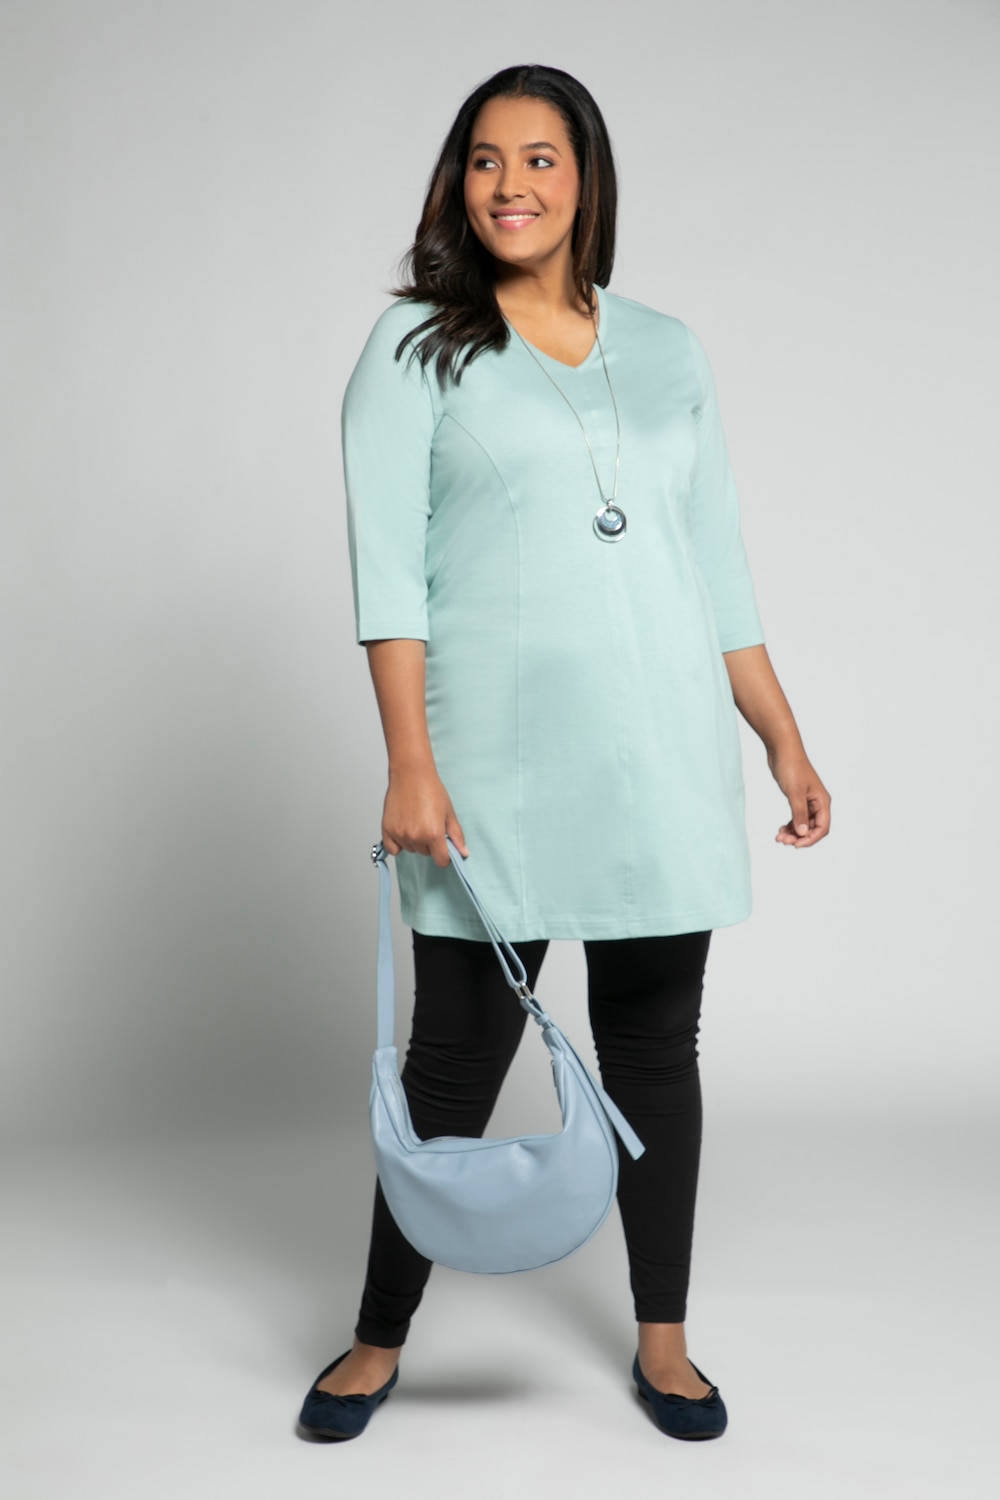 Plus Size Princess Seam Knit Tunic, Woman, turquoise, size: 20/22, cotton, Ulla Popken